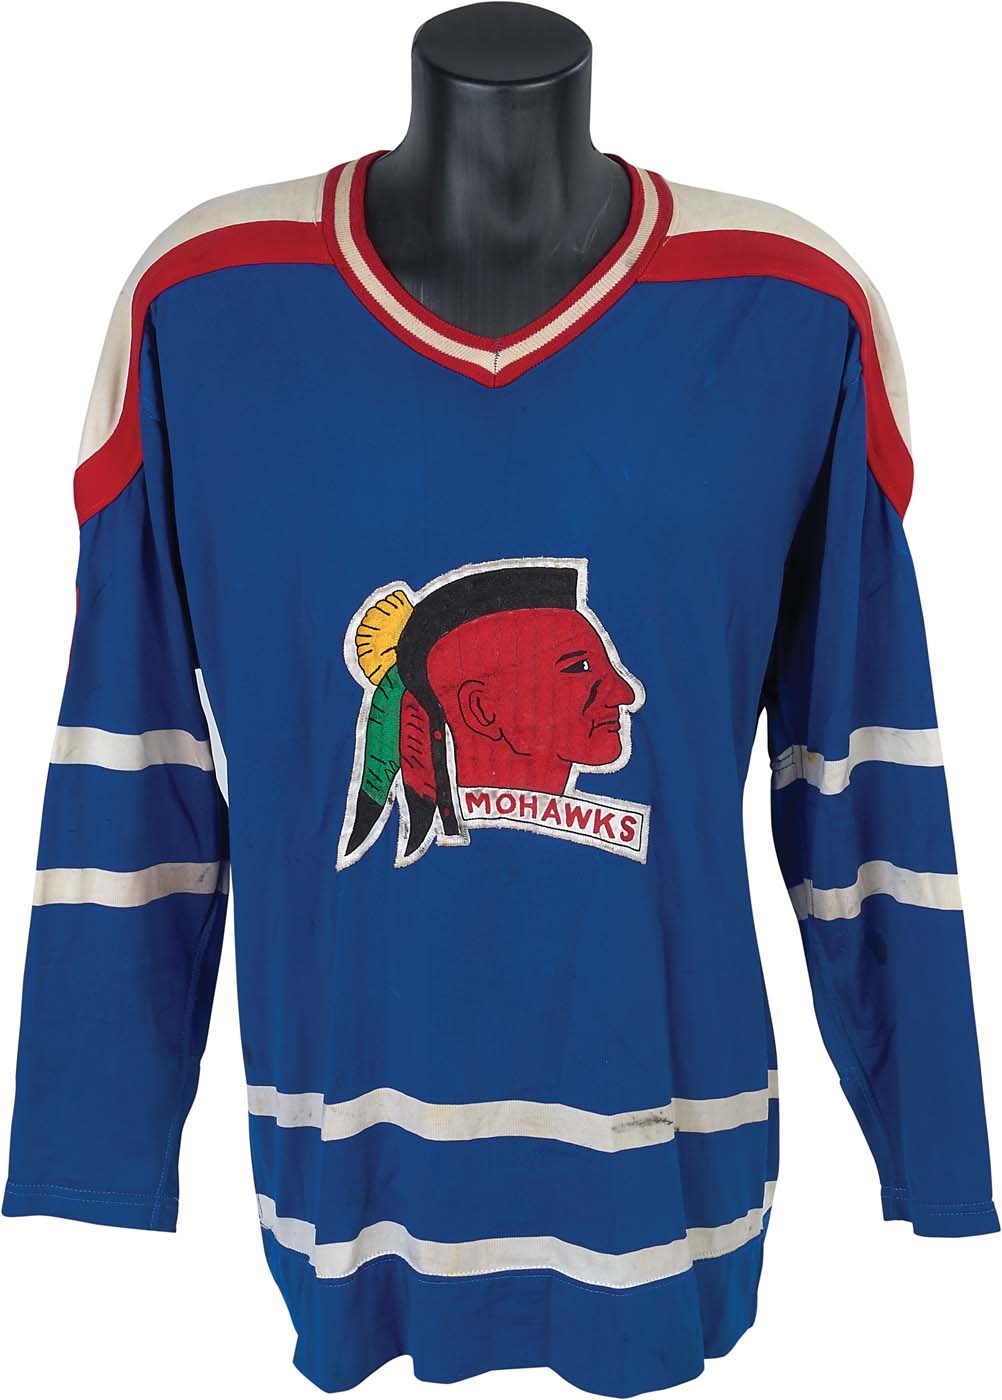 Hockey - Late-1970s Muskegon Mohawks Game Worn Jersey